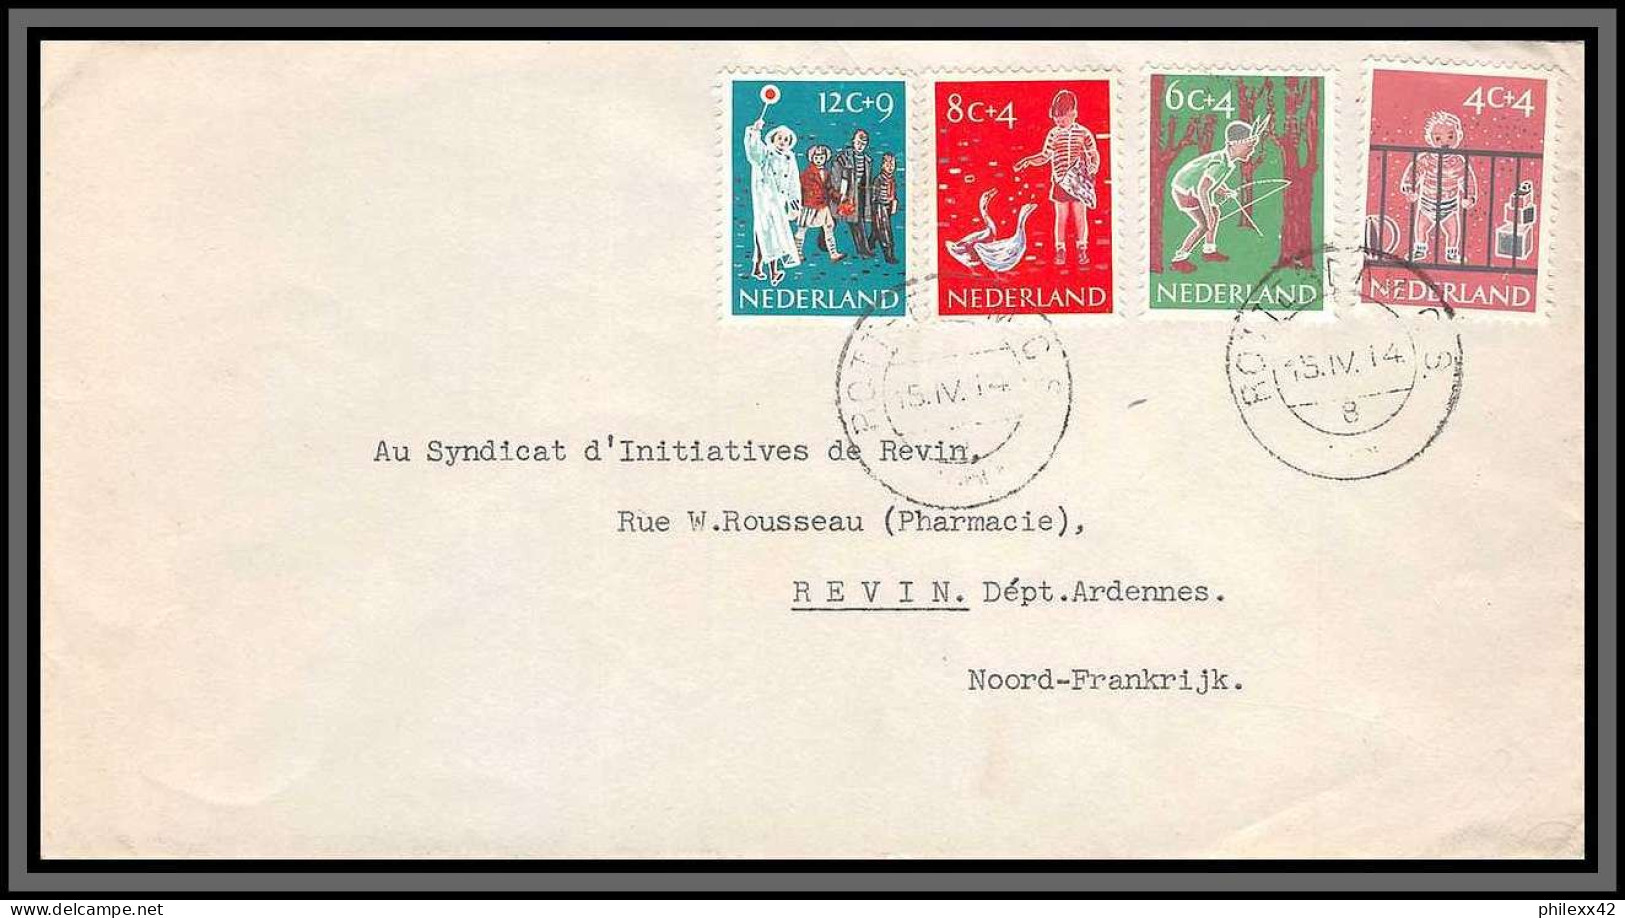 11355 1959 Kind. Keurig Getypt Adres Rotterdam Pour Revin Ardennes Lettre Cover Pays Bas Nederland  - Postal History